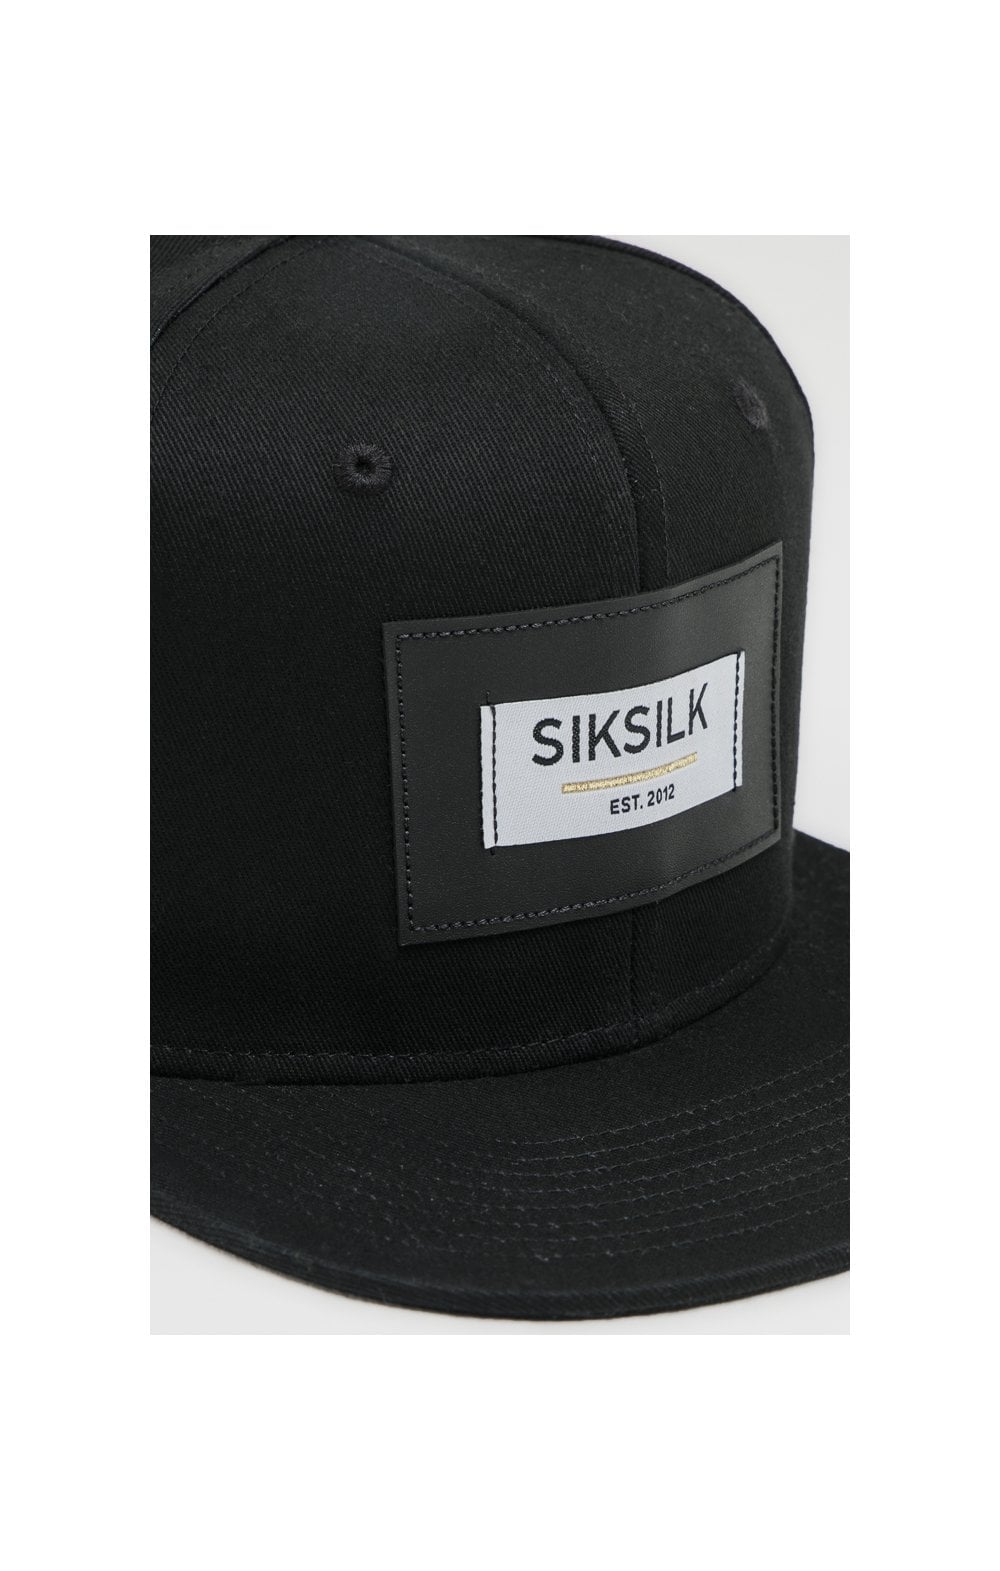 SikSilk PU Patch Snapback - Black (1)